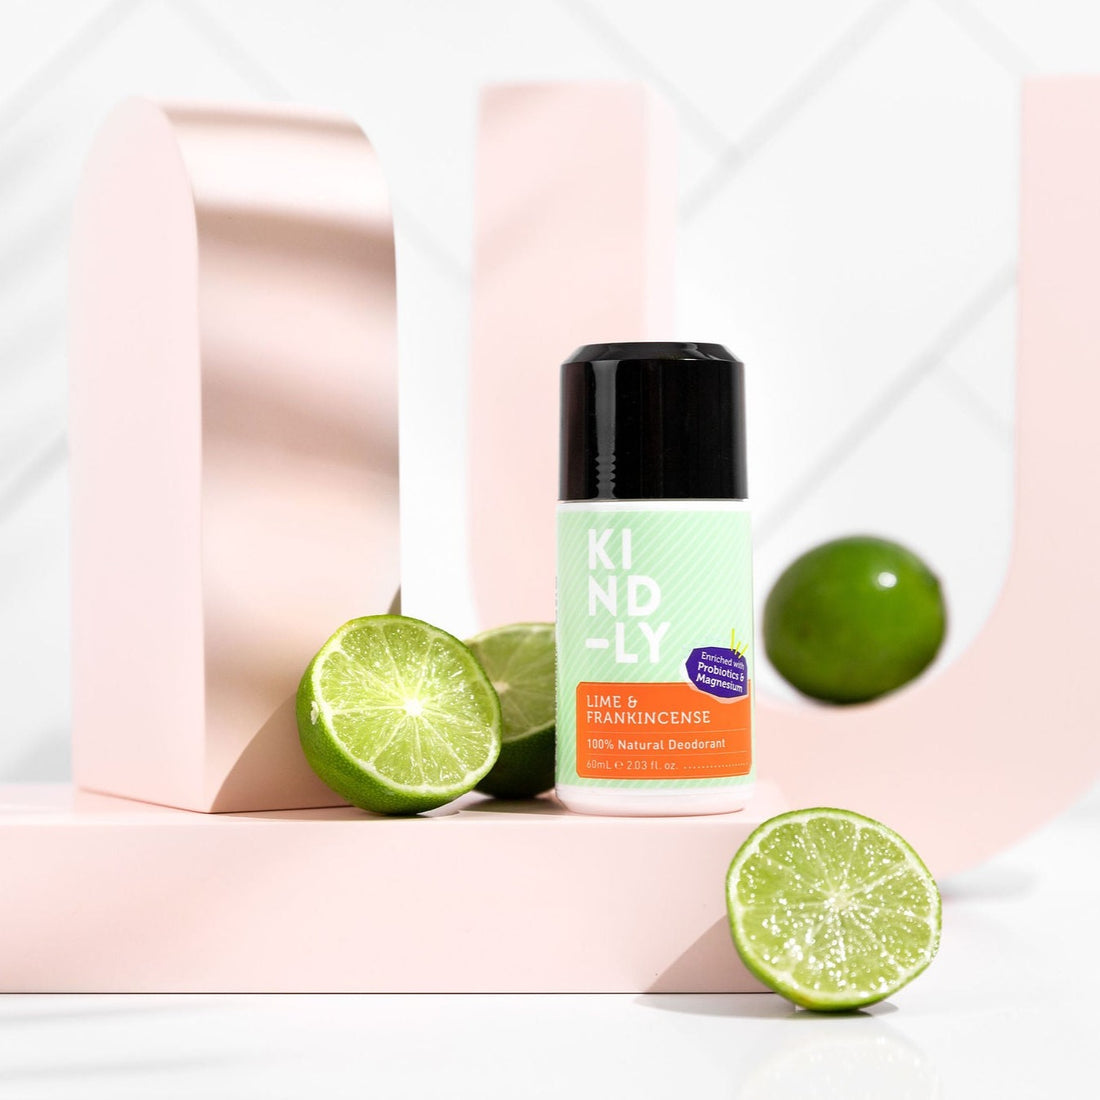 Lime & Frankincense - 100% Natural Deodorant